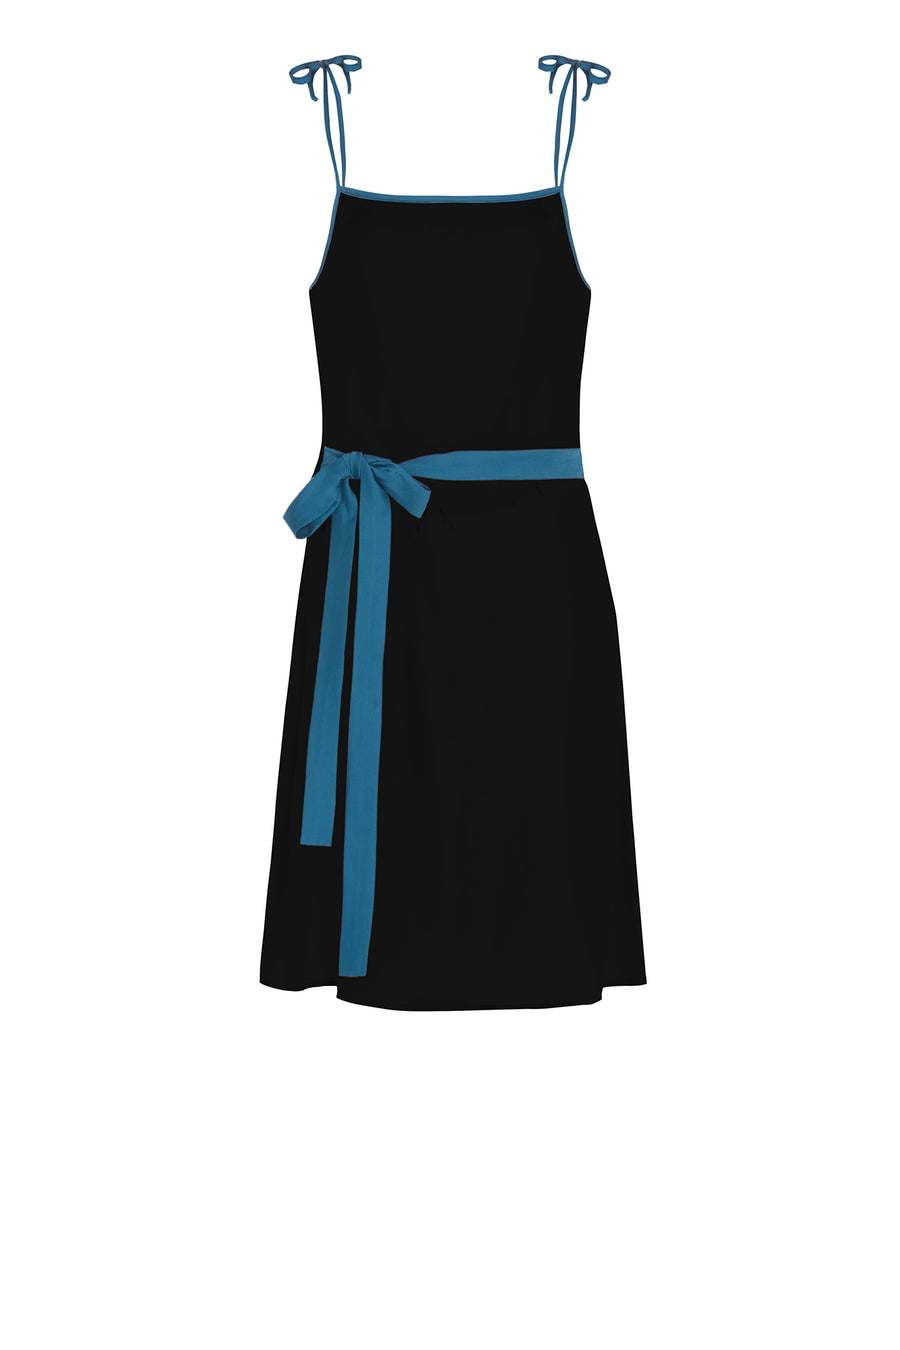 Women's loungewear - black and blue slip dress